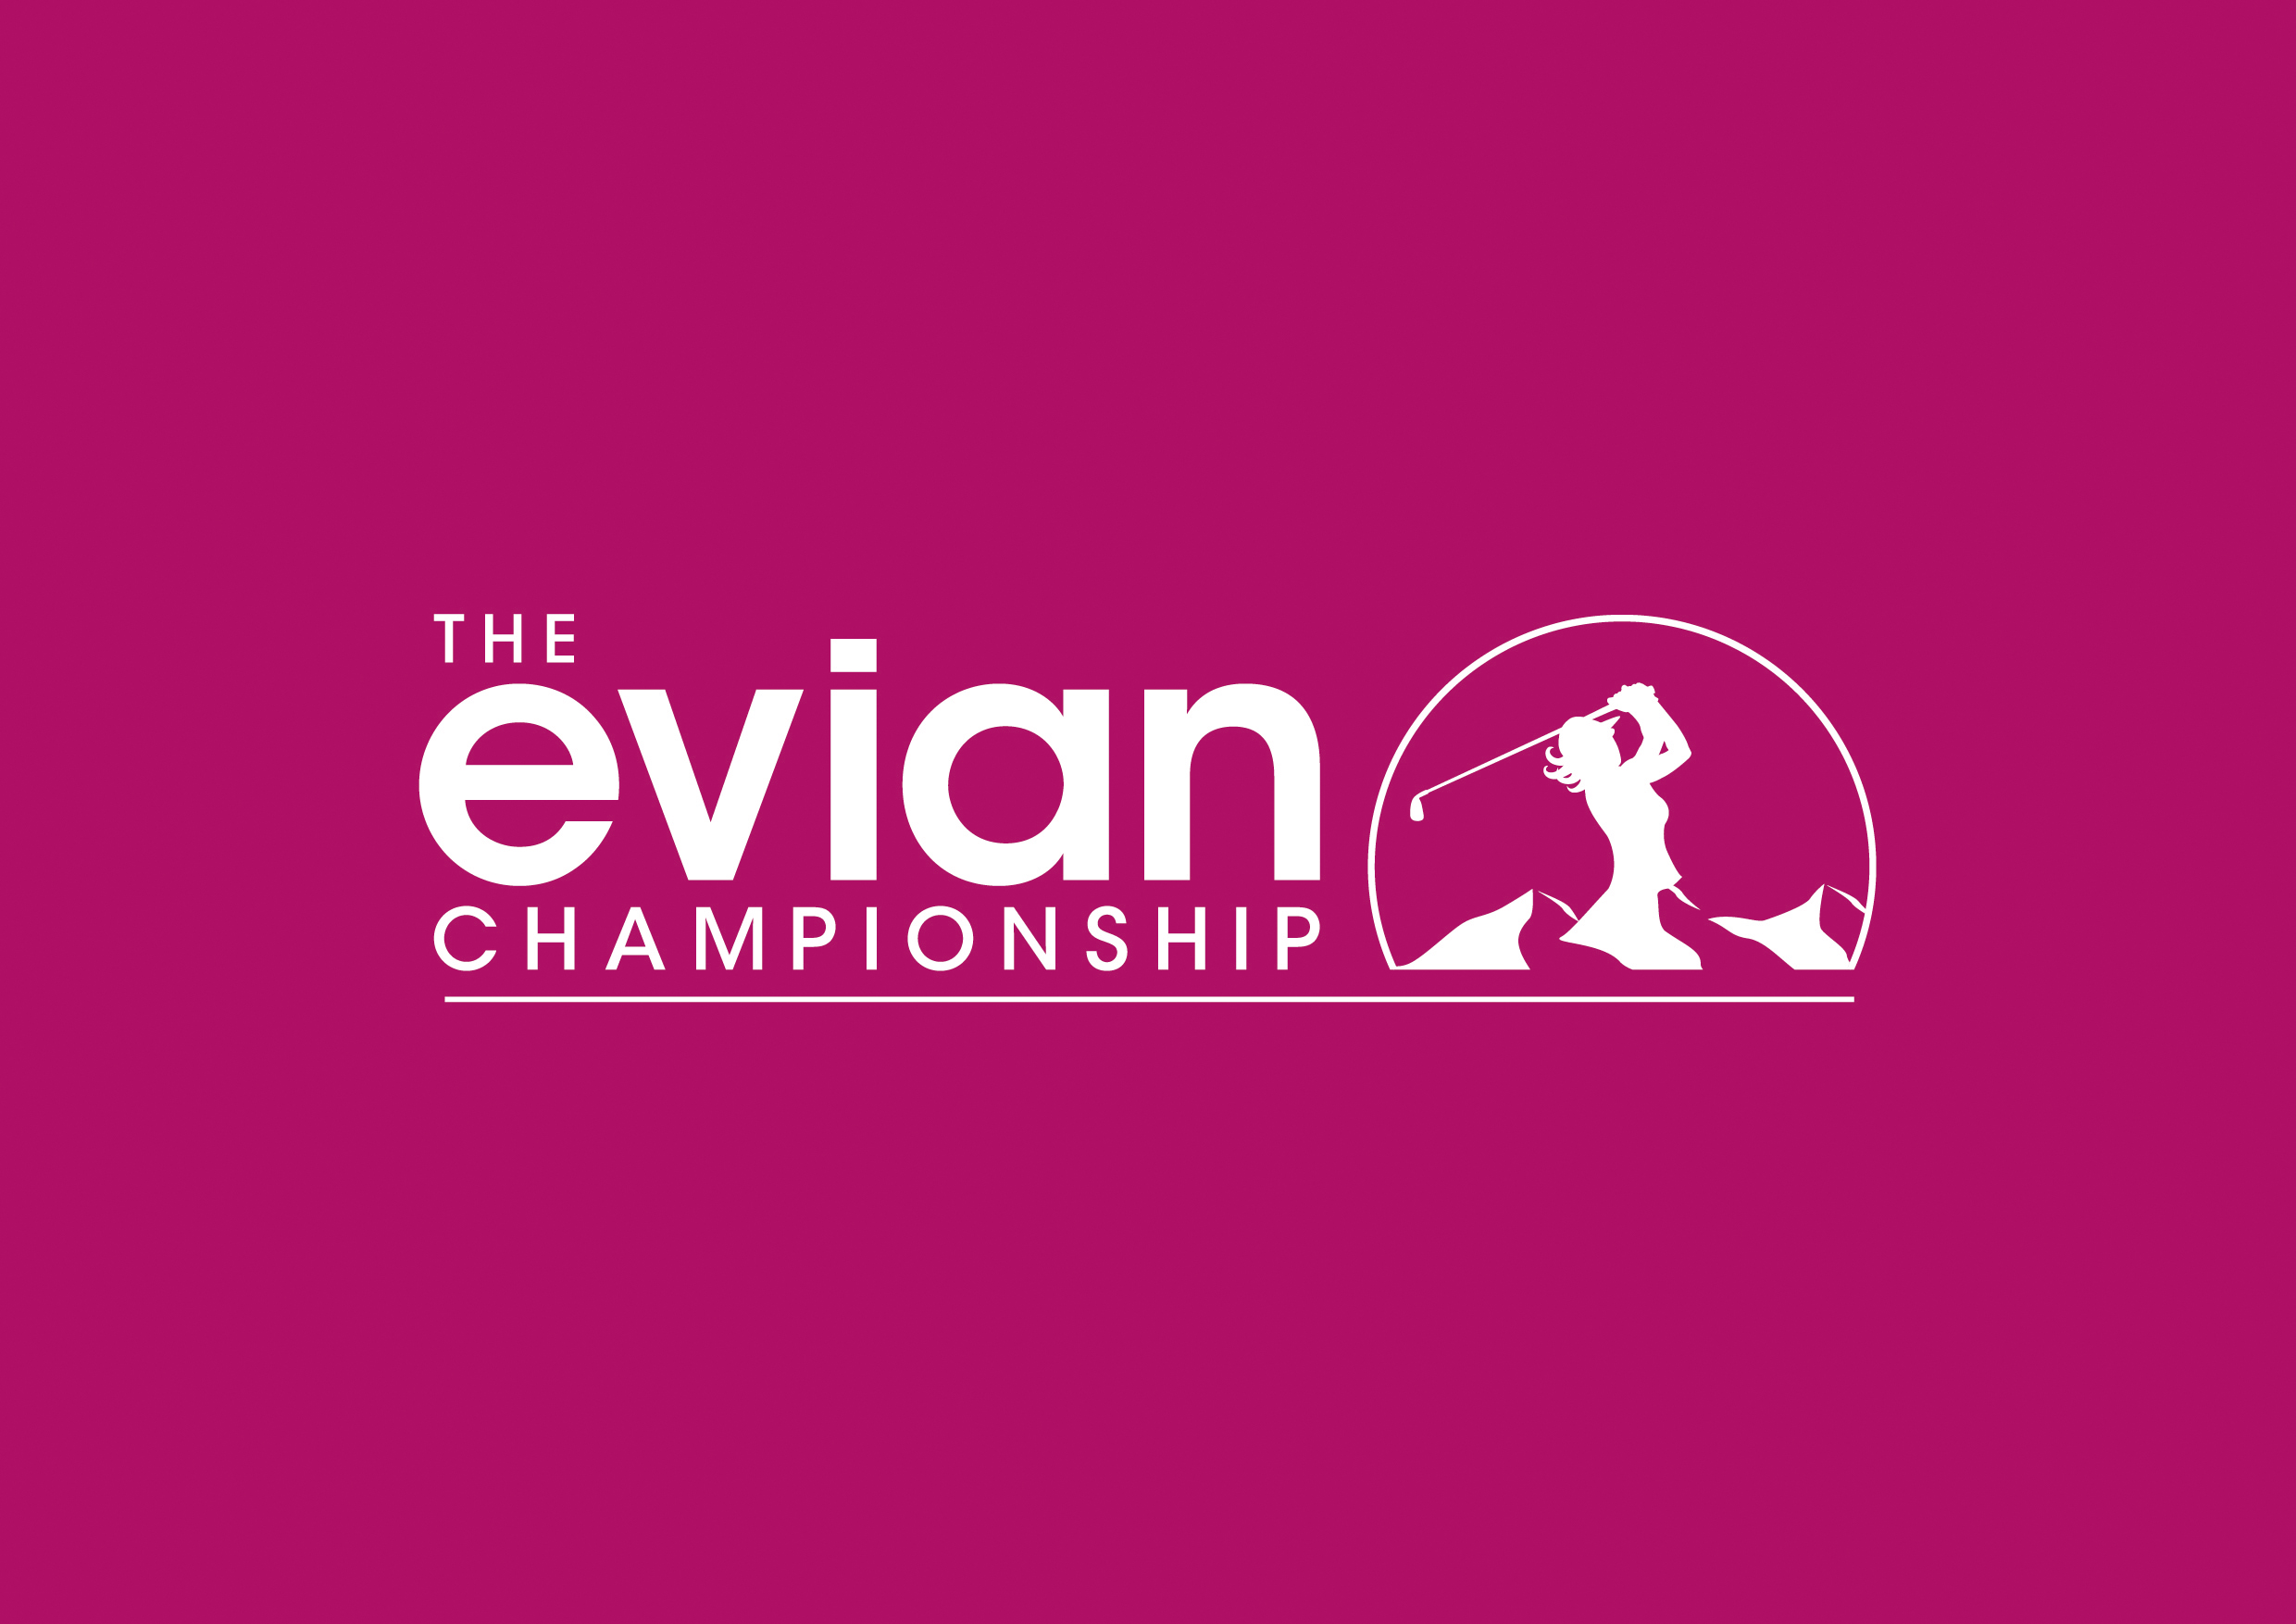 Les ballons de baudruche s’invitent à l’Evian Championship